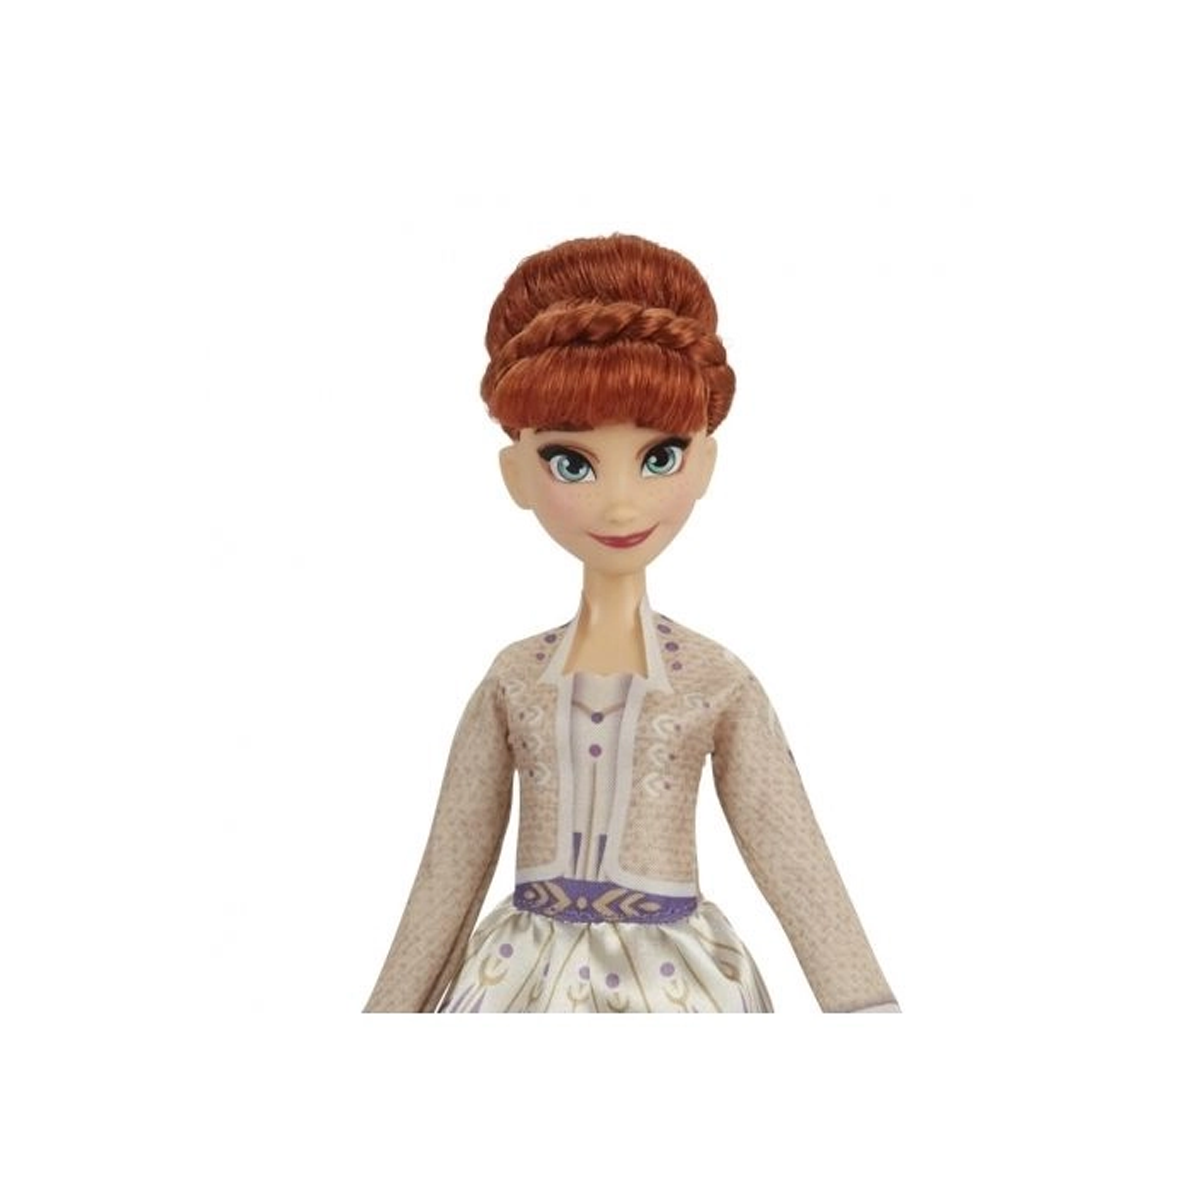 Boneca Disney Frozen 2 Anna Trajes de Arendelle - Hasbro